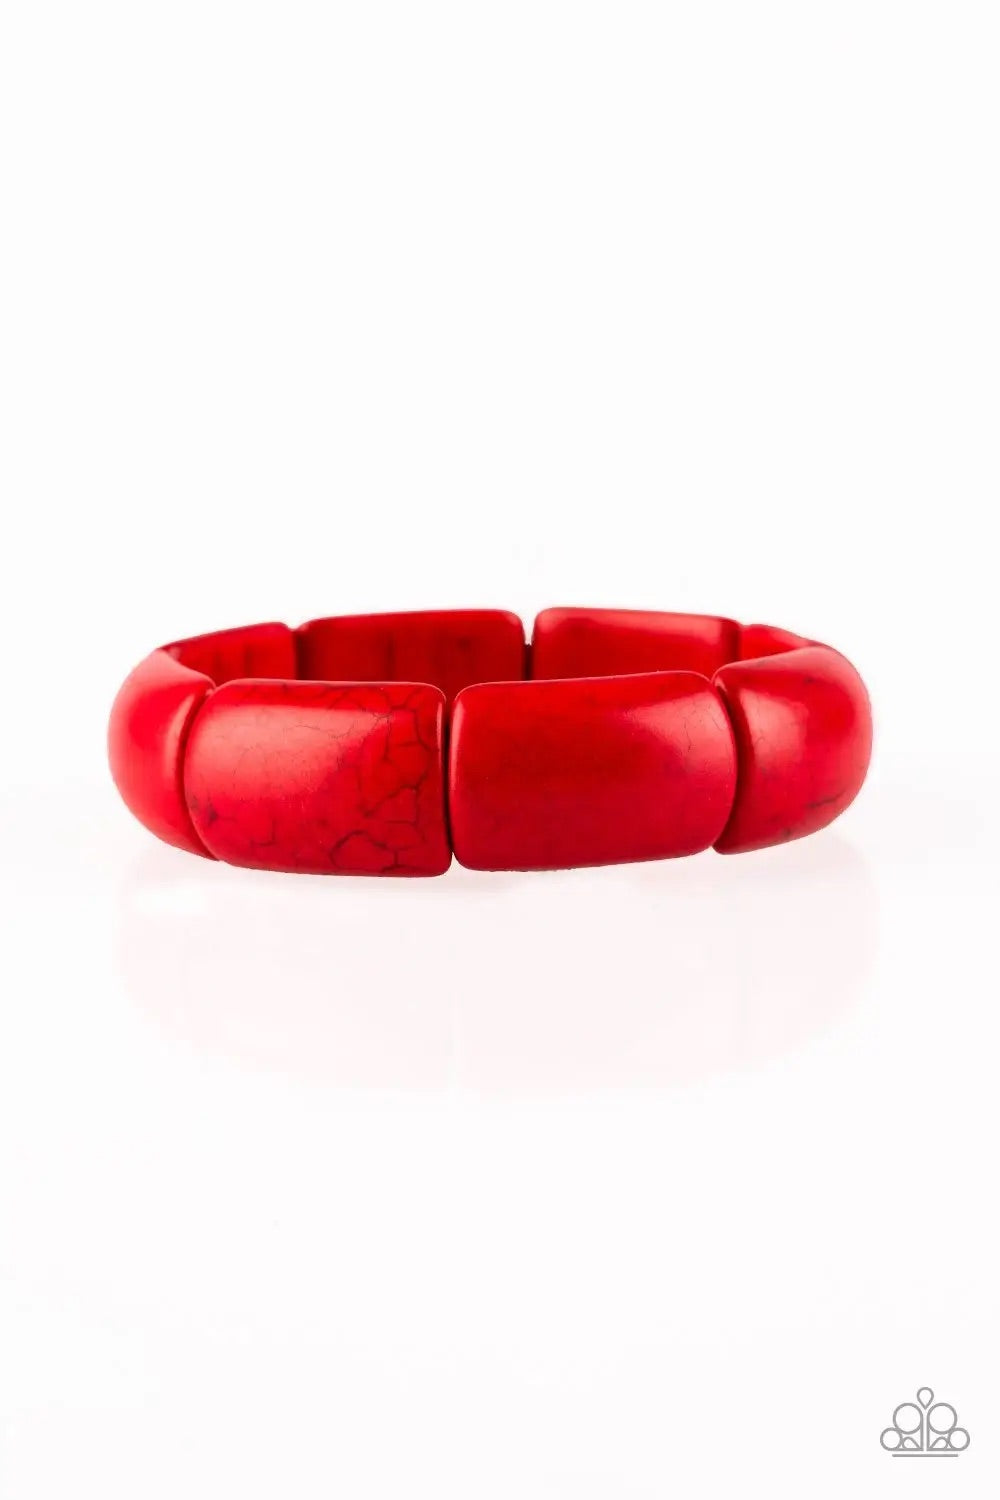 Paparazzi “Peace Out” Red Stone Stretch Bracelet